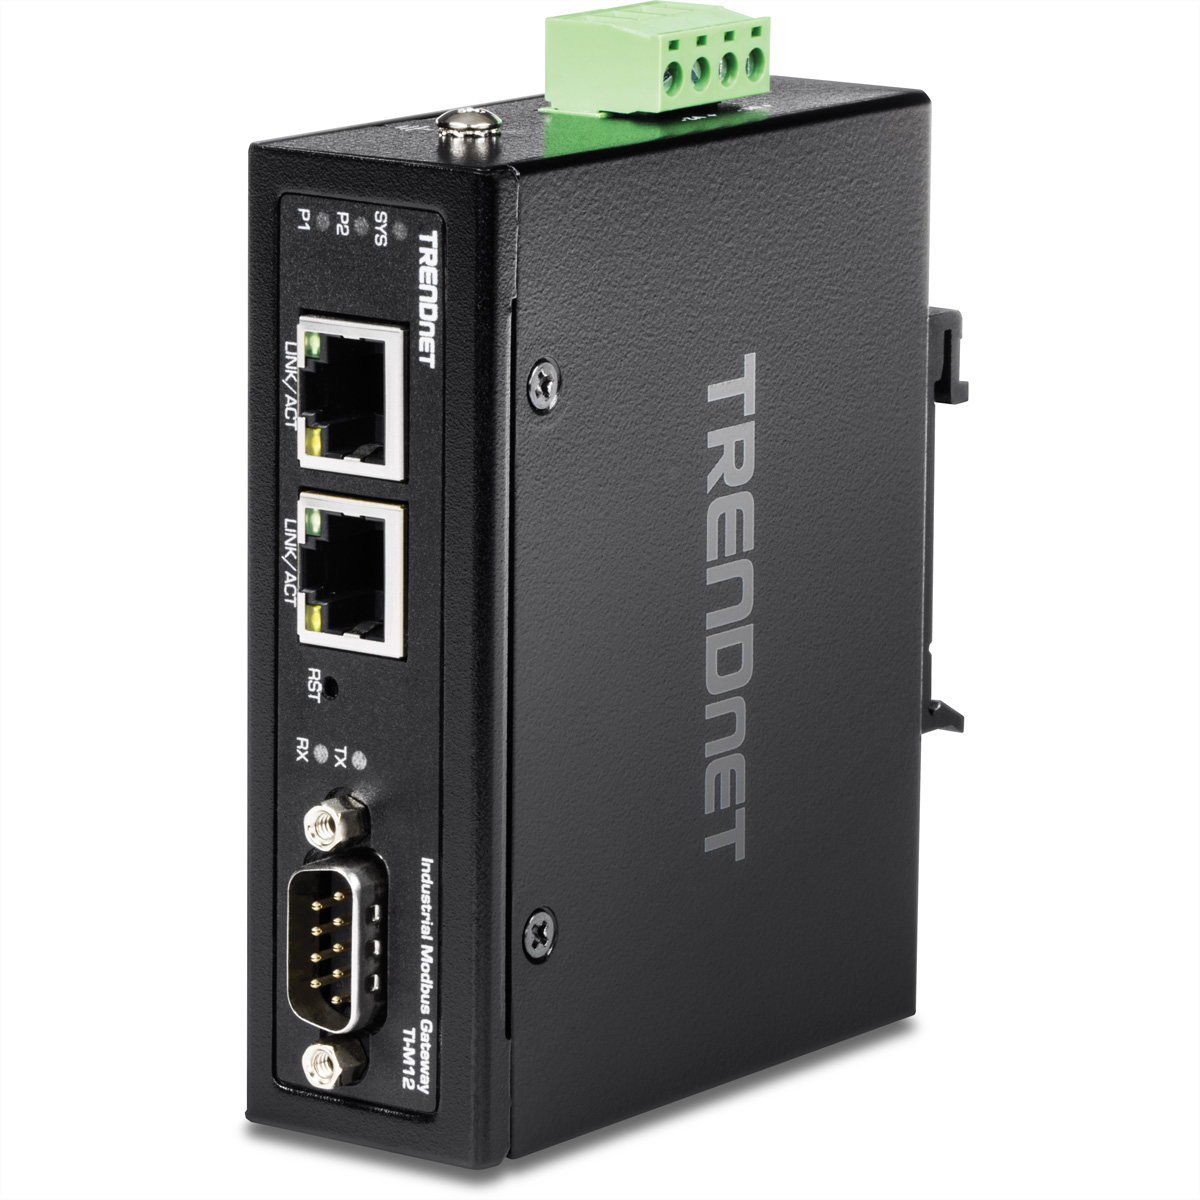 TRENDNET TI-M12 Modbus Gateway Industrial Ethernet Fast Switch